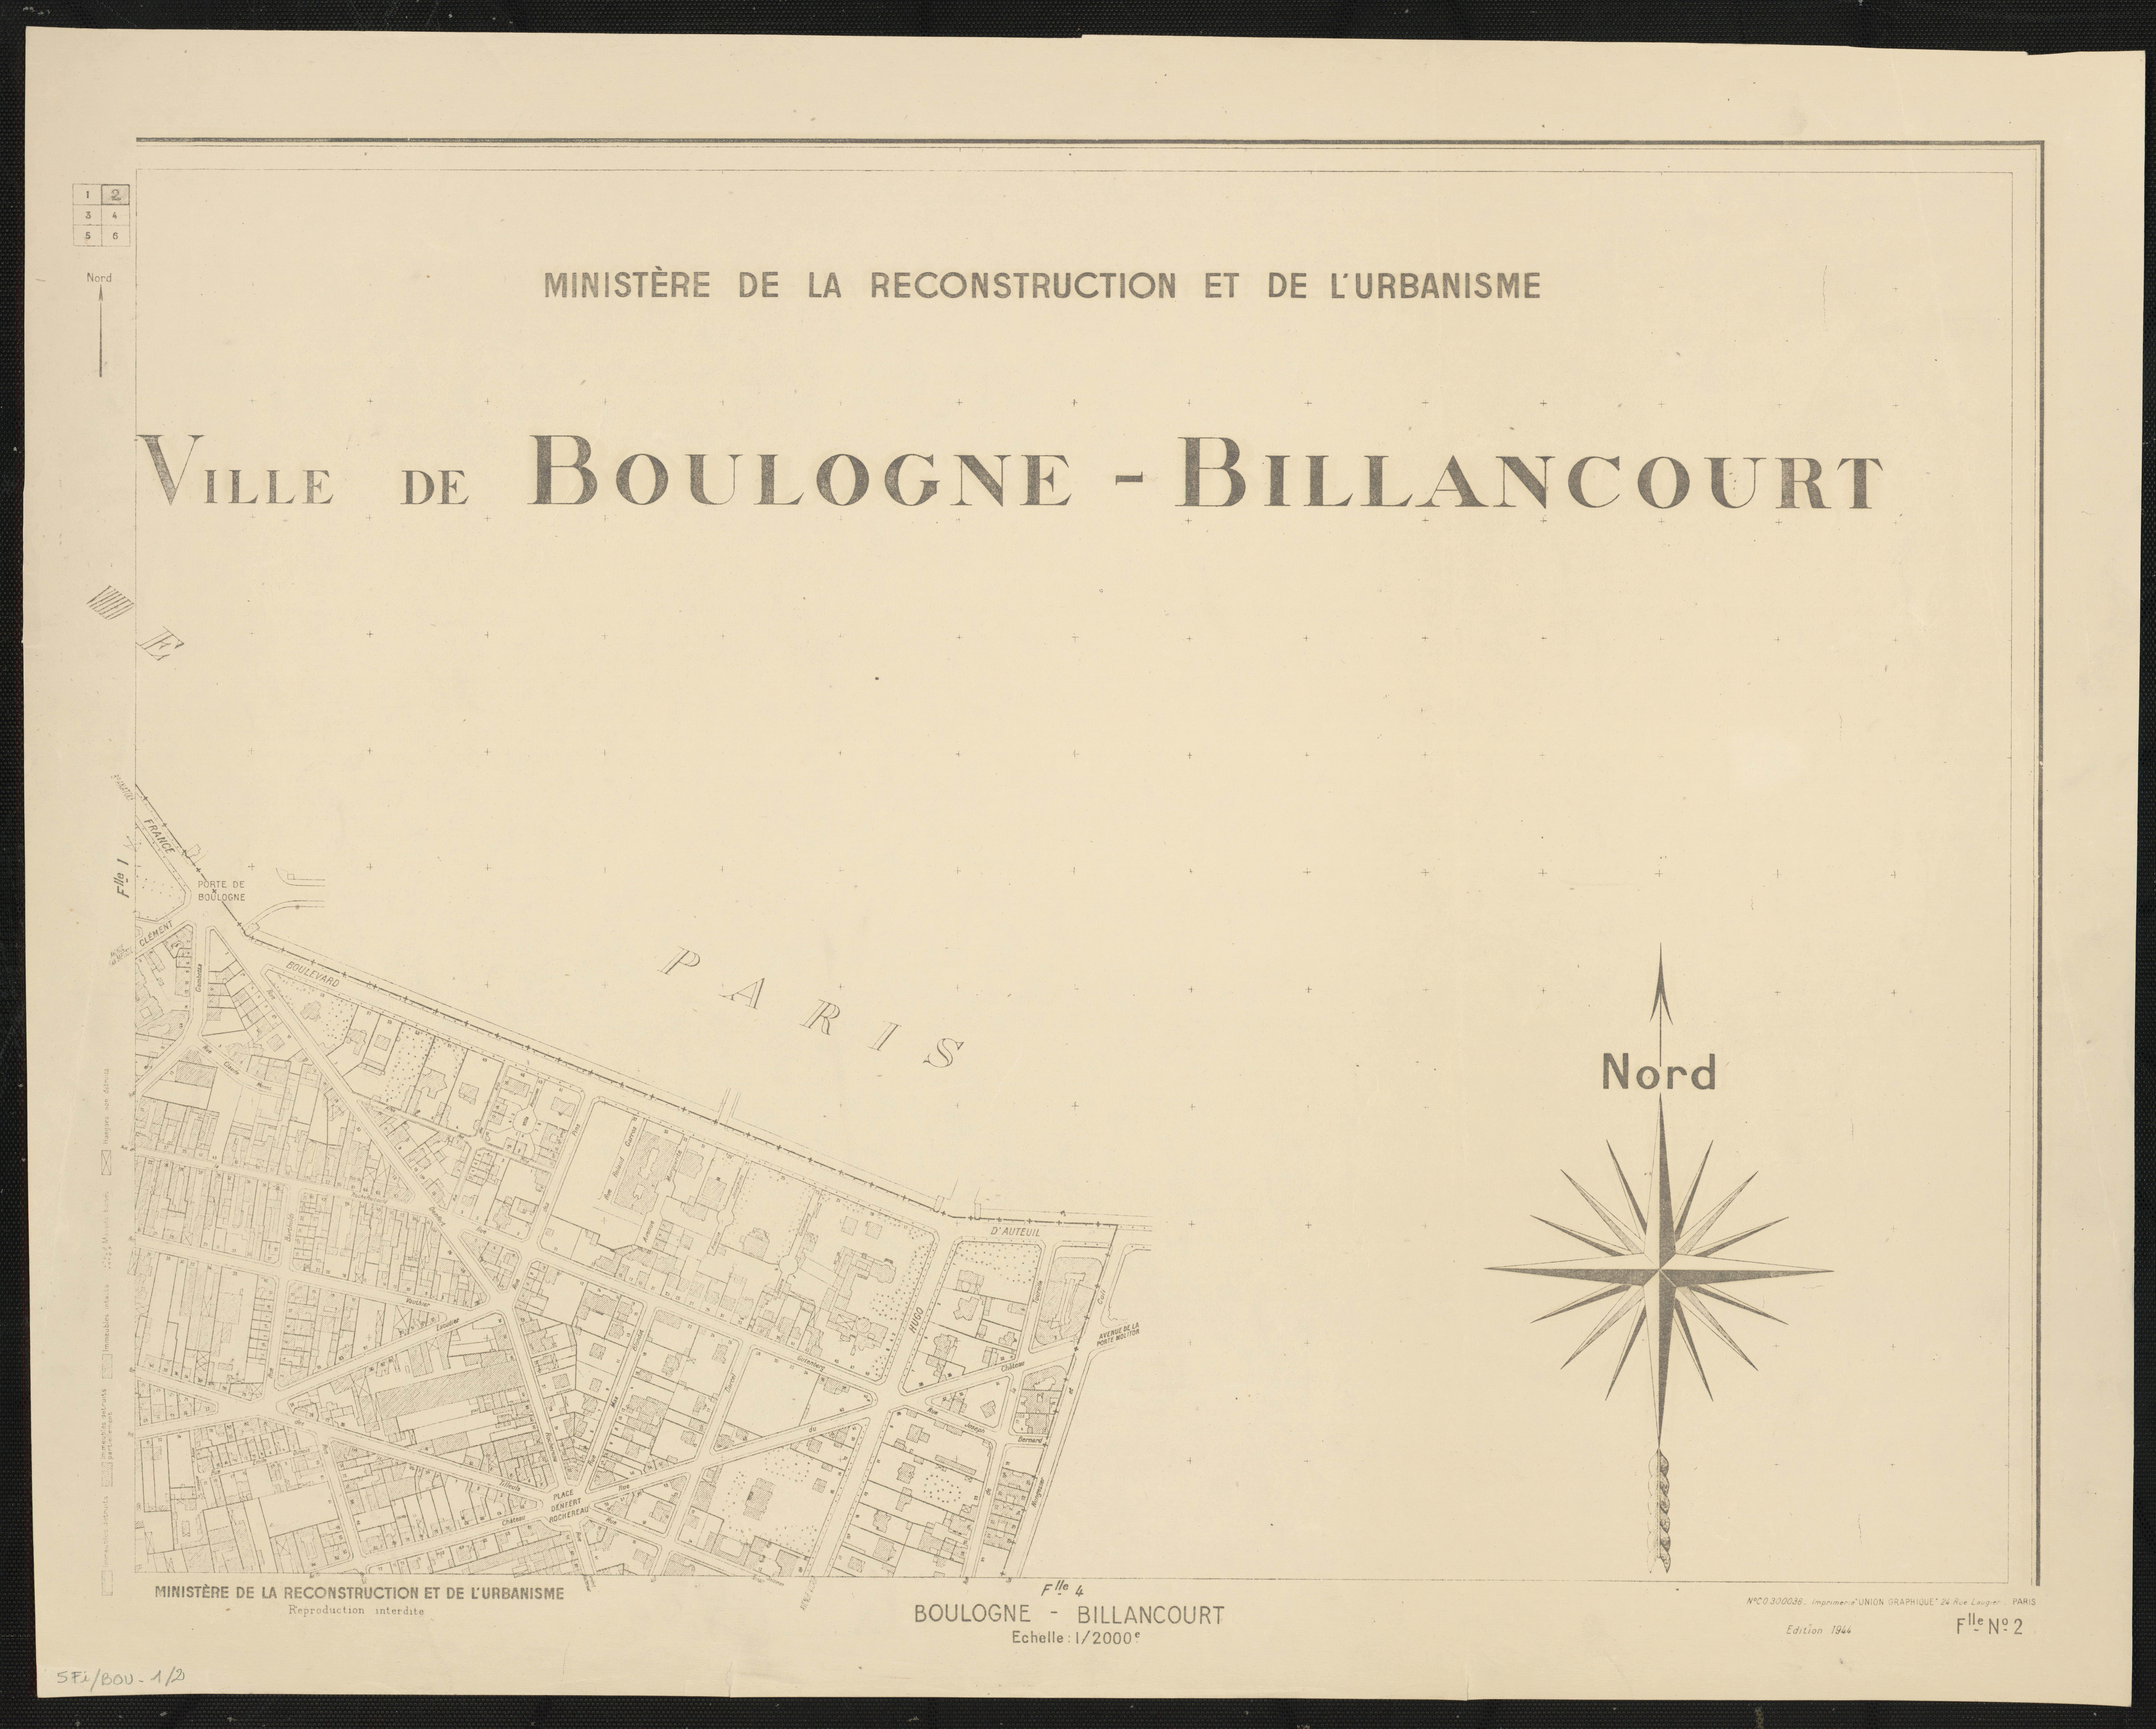 Boulogne-Billancourt. 1944.